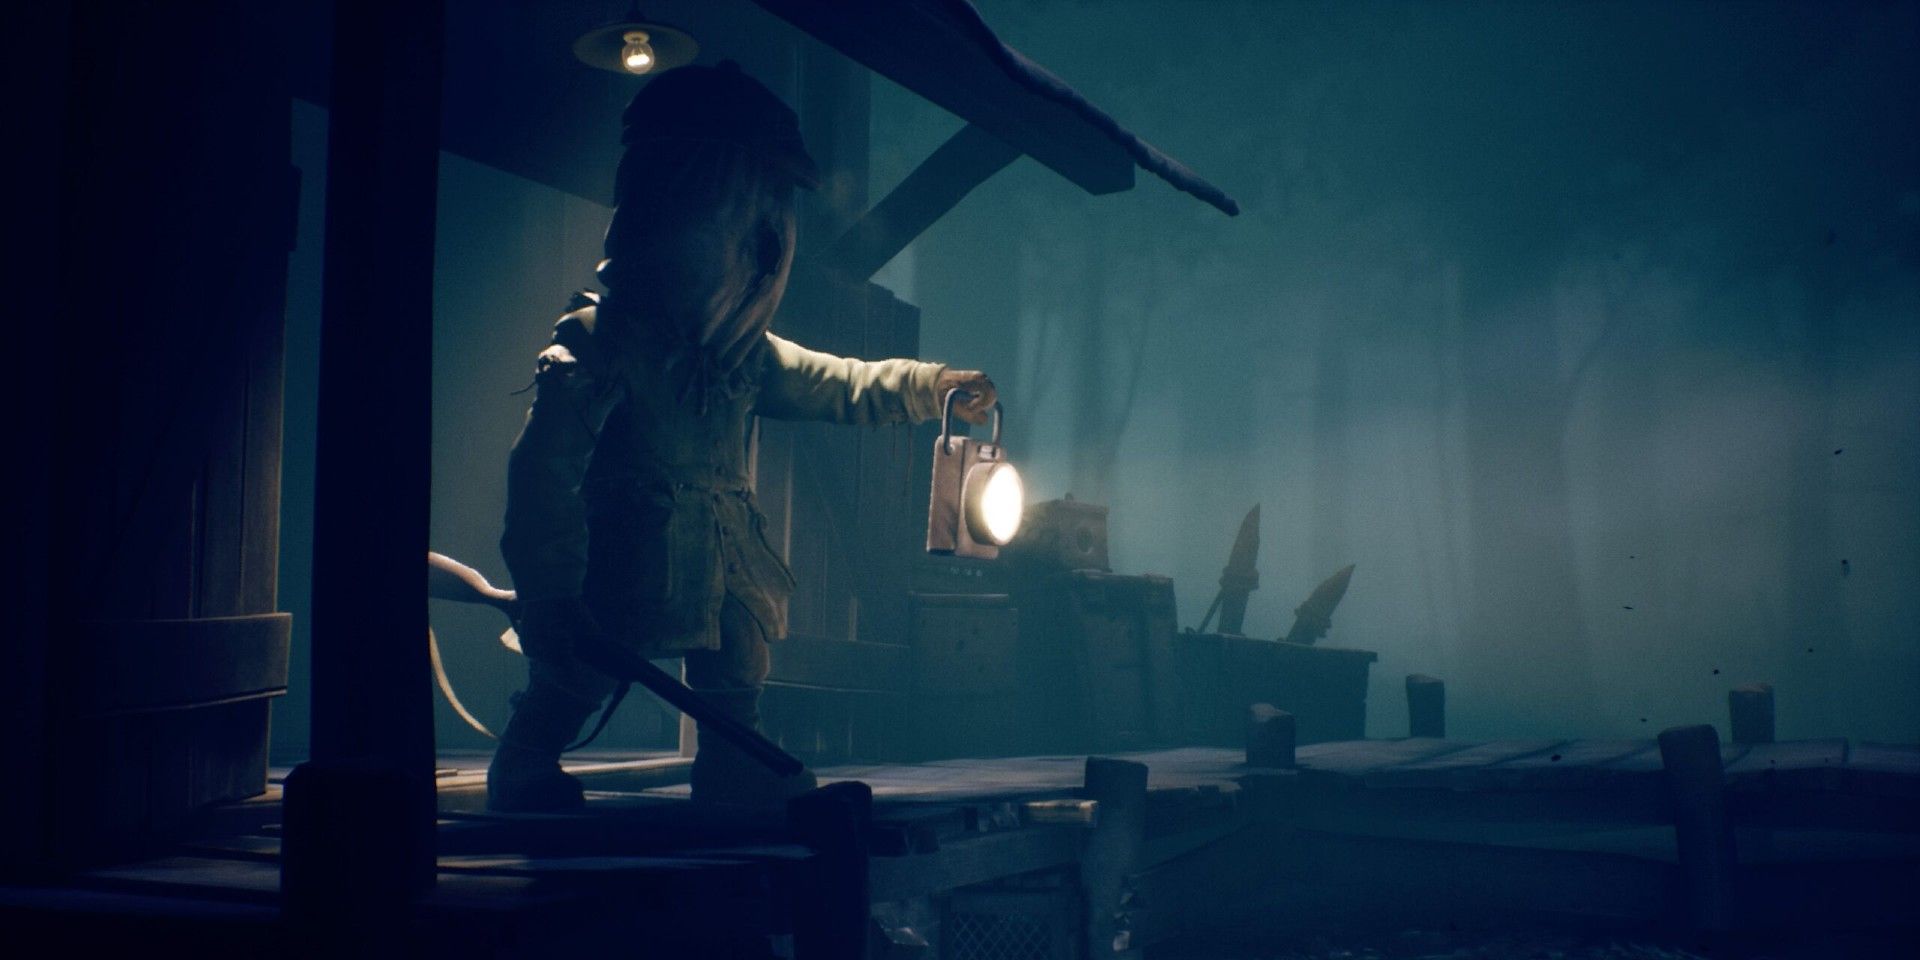 Little Nightmares Developer Teases Next Game In Creepy Video